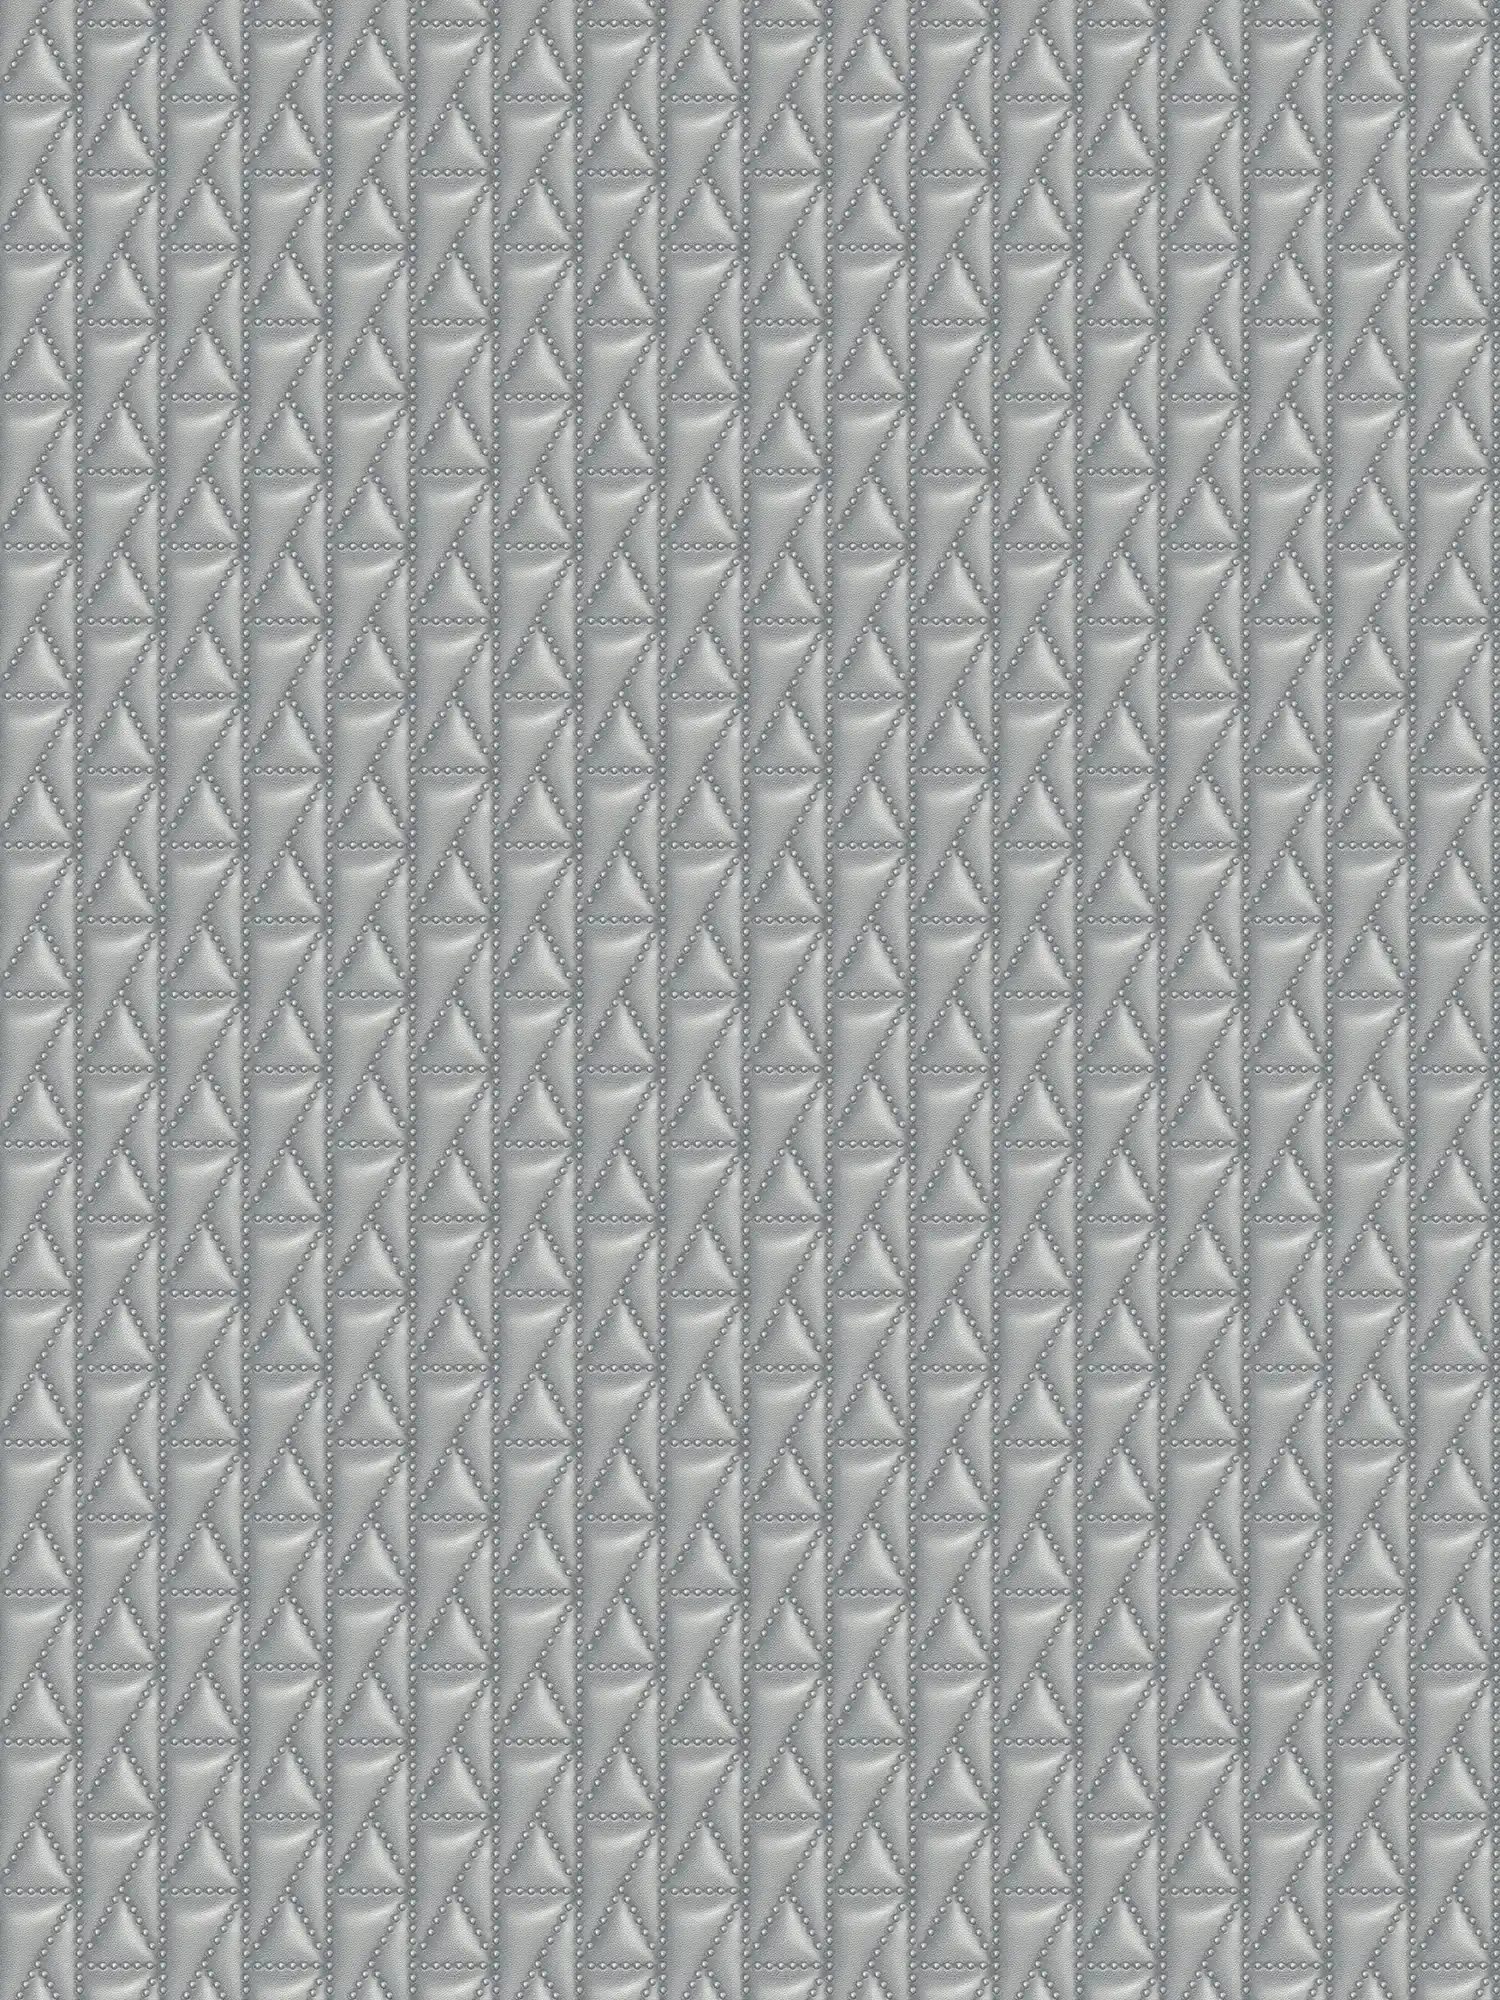 Non-woven wallpaper Karl LAGERFELD quilt bags design - grey
